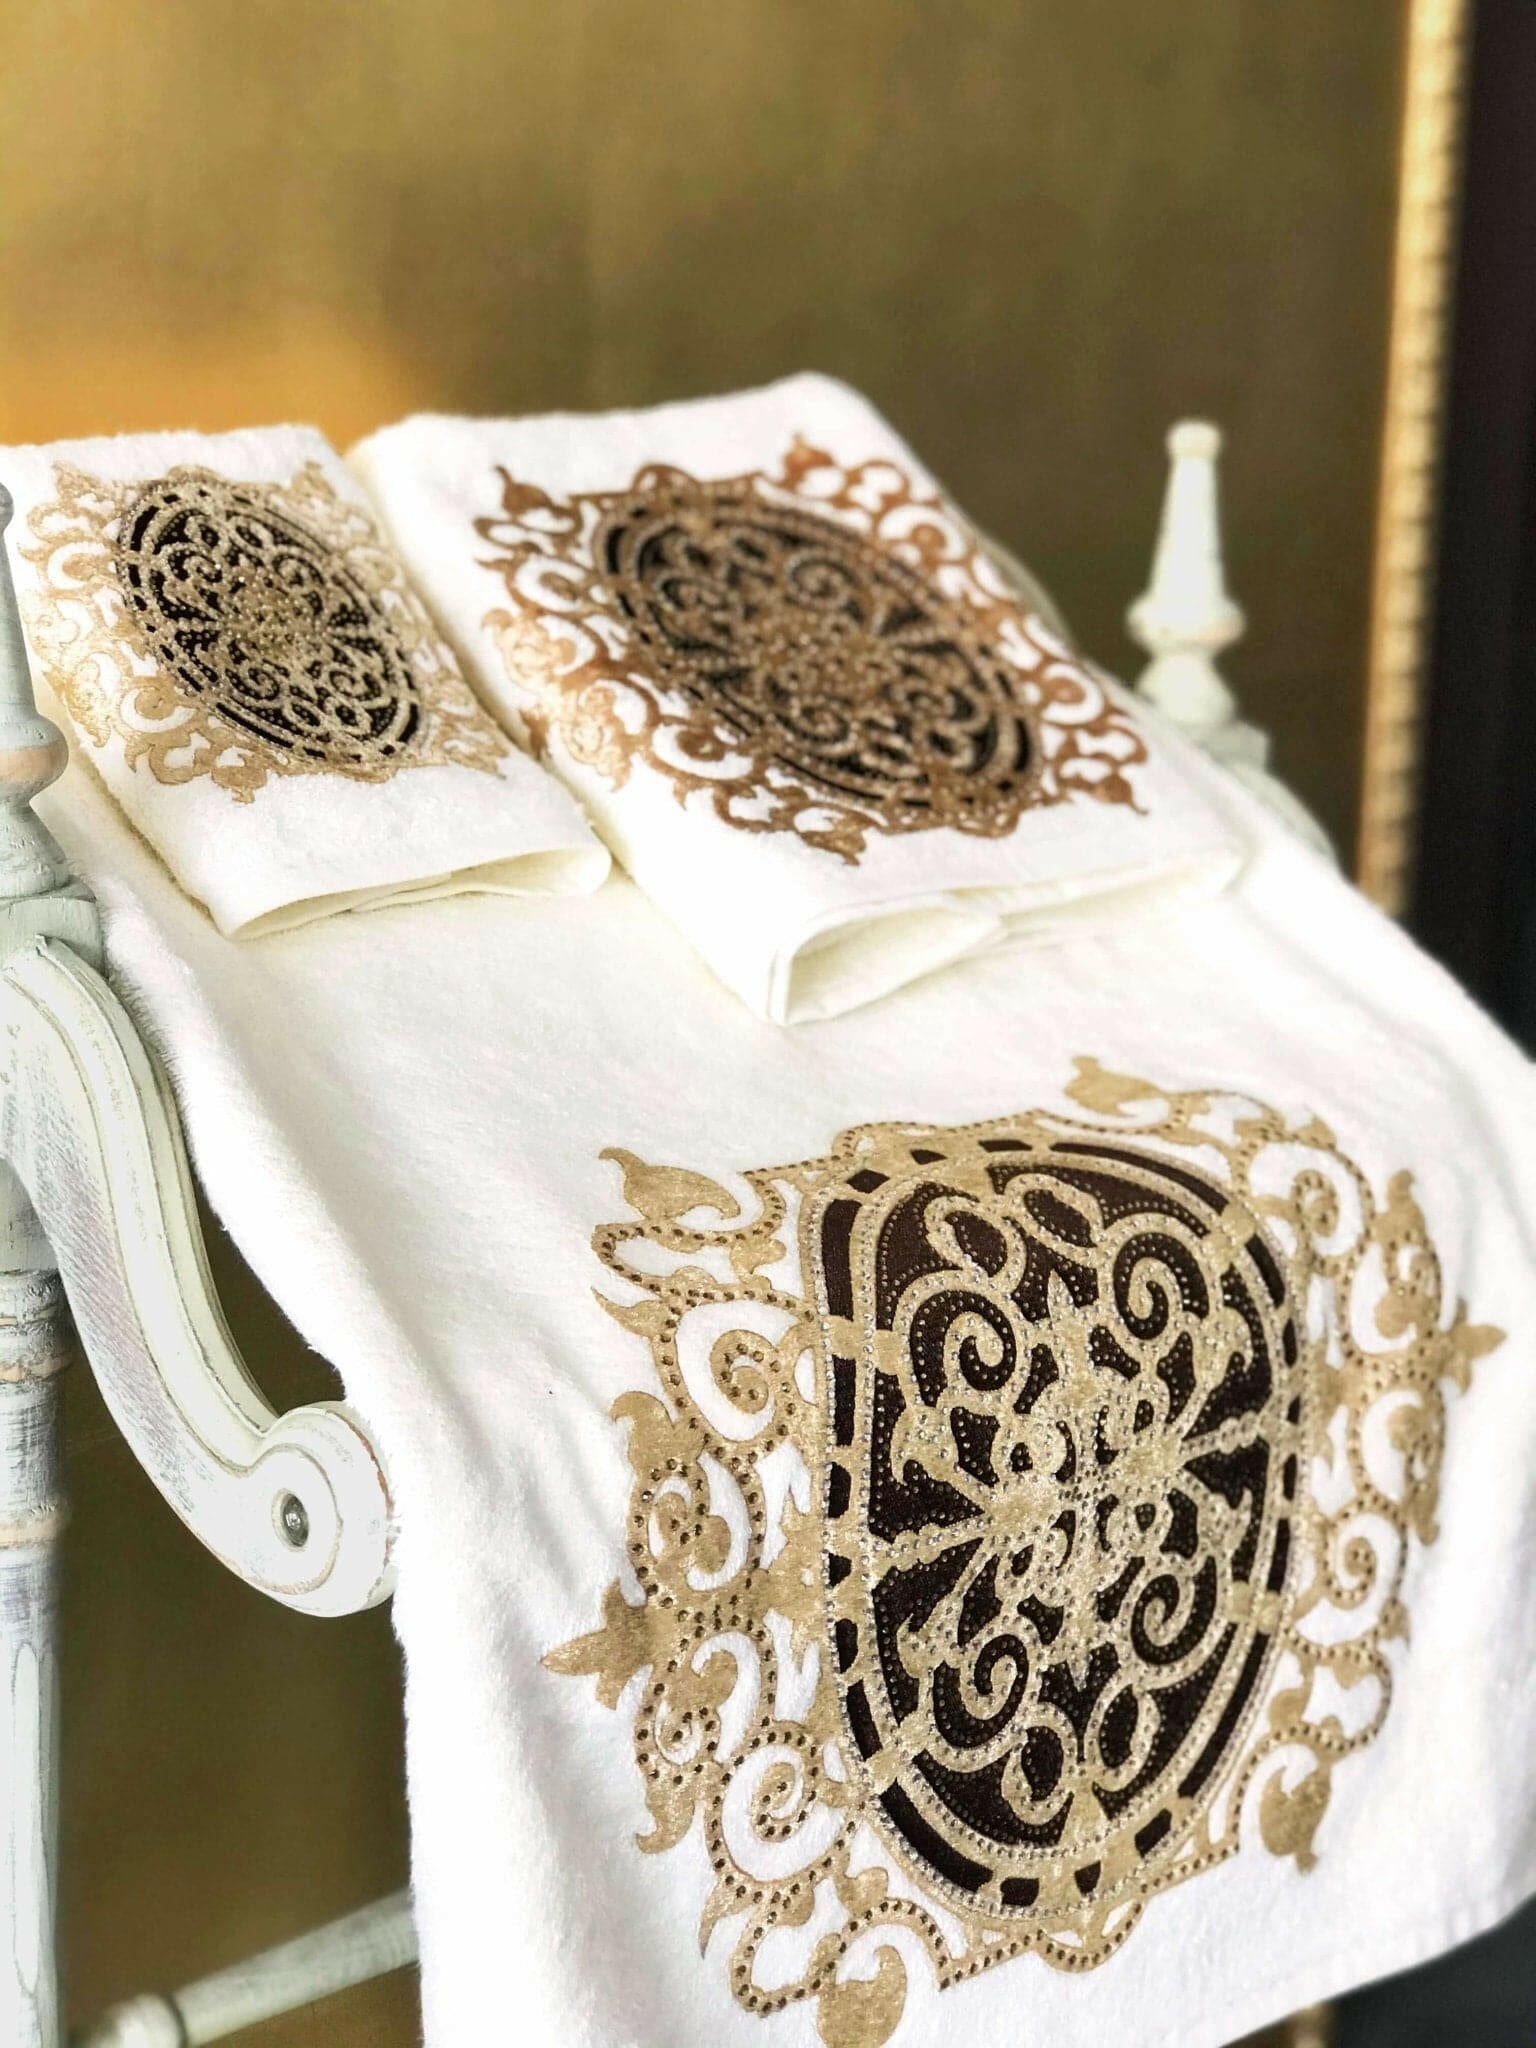 Personalized Initial Lyra Towel Set